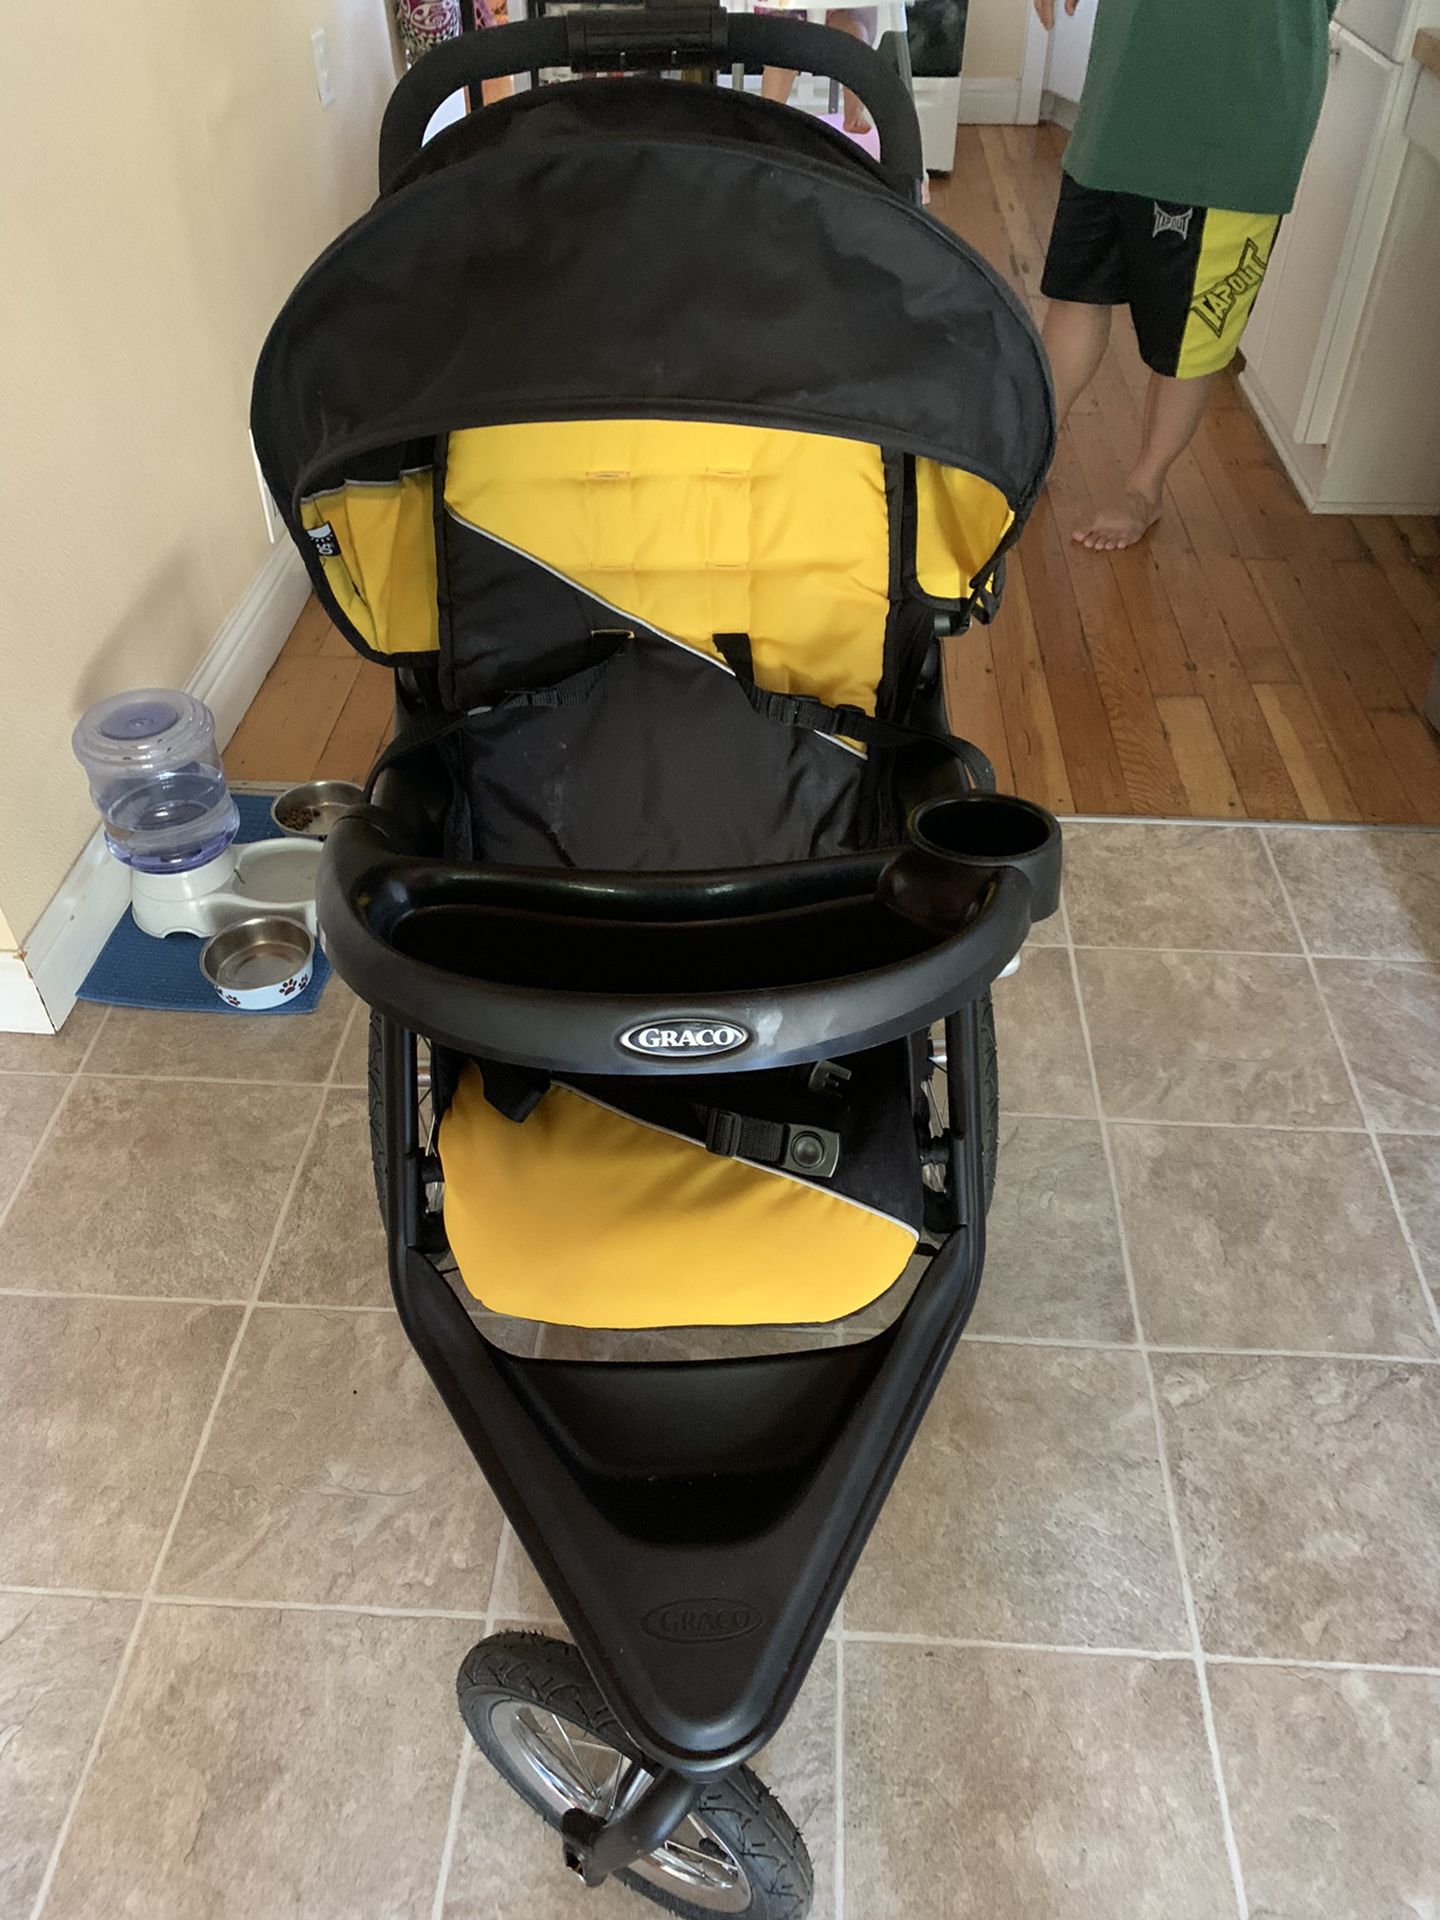 Graco jogging stroller & car seat